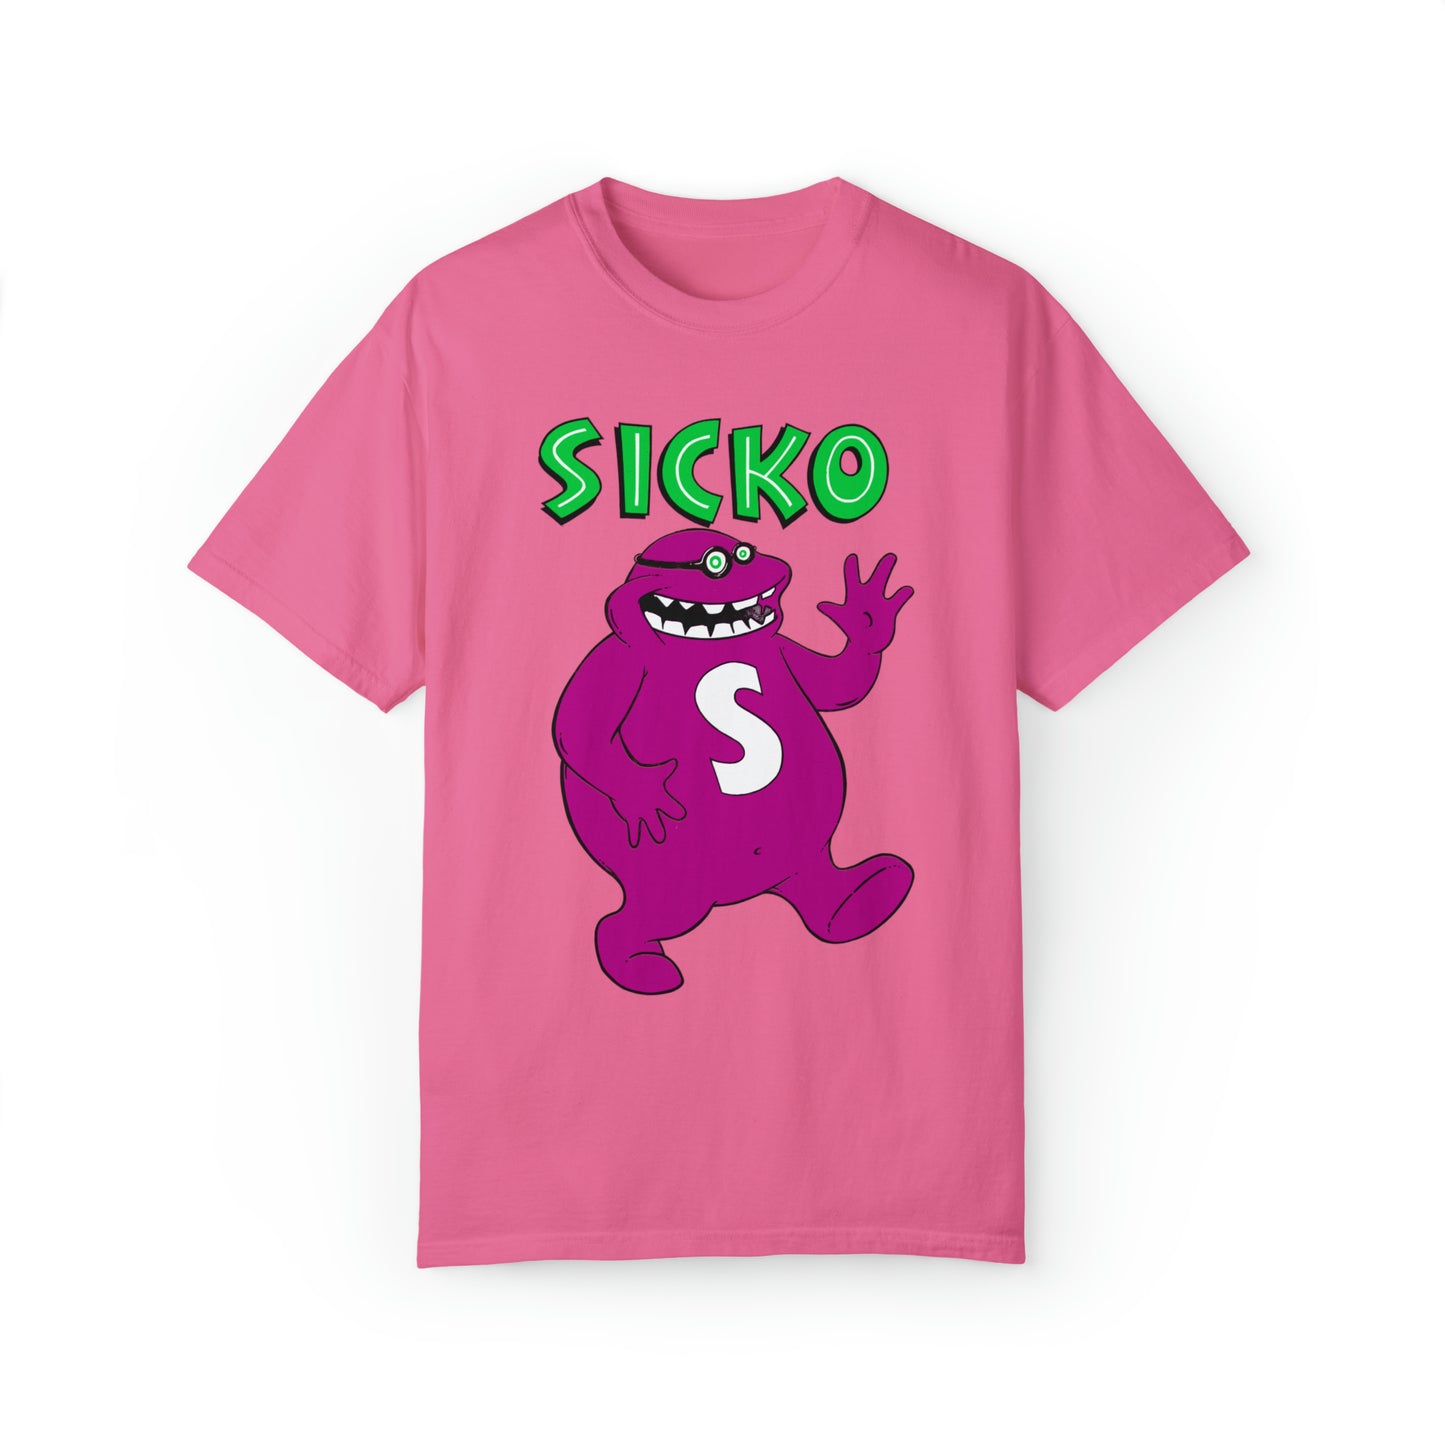 Sicko Sickie Tshirt